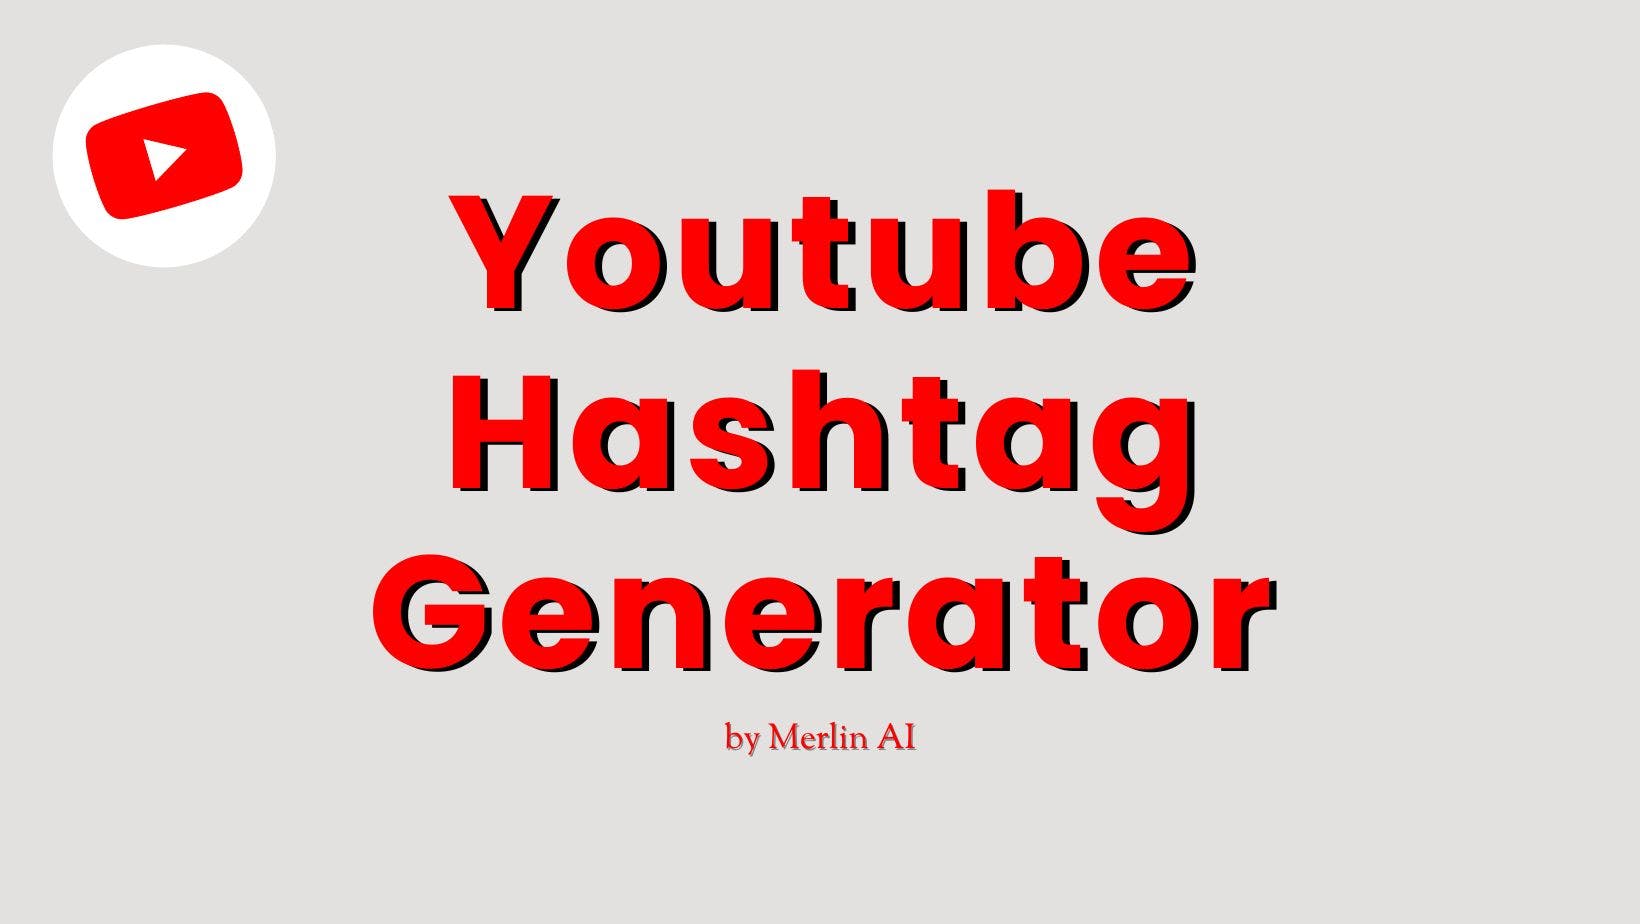 Cover Image for Generador gratuito de hashtags de YouTube por Merlin AI